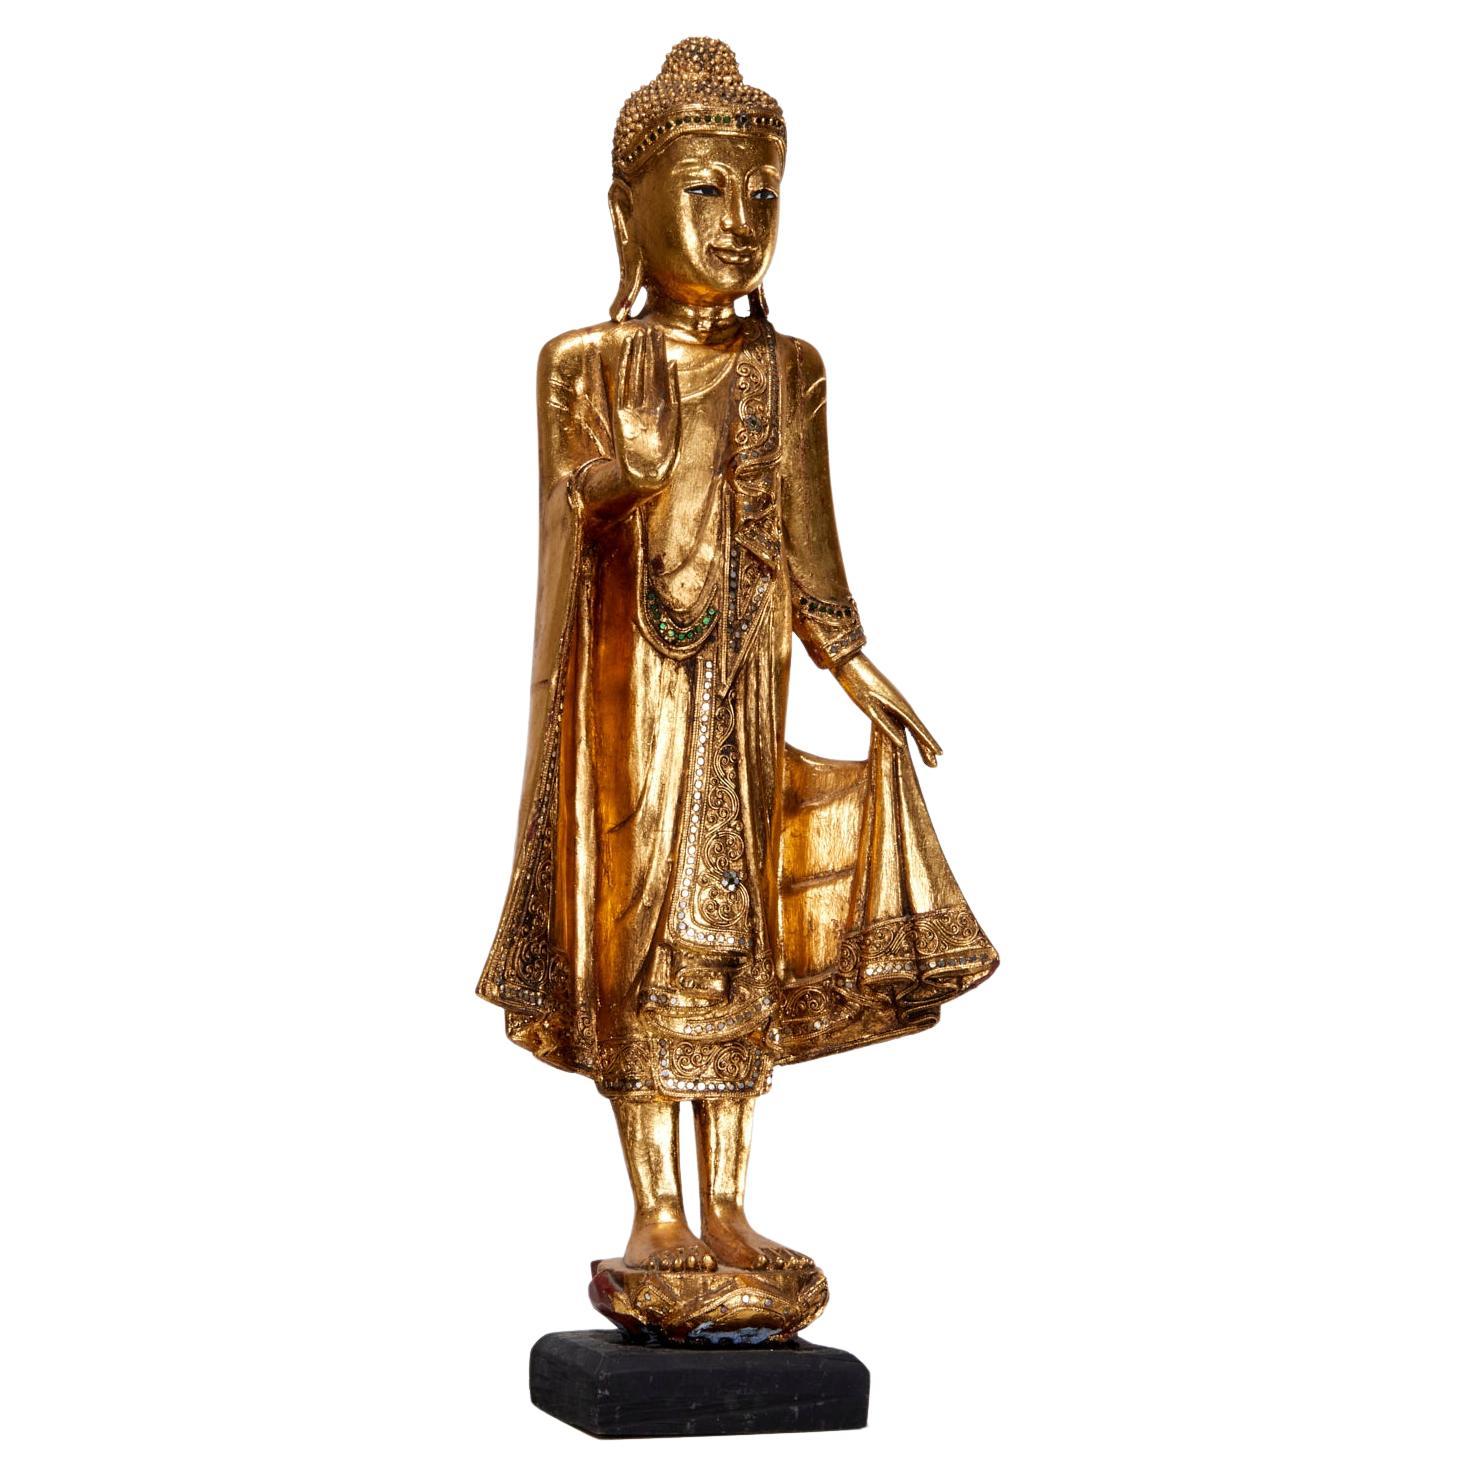 Grand Bouddha birman debout en bois doré de Mandalay avec inserts miroirs